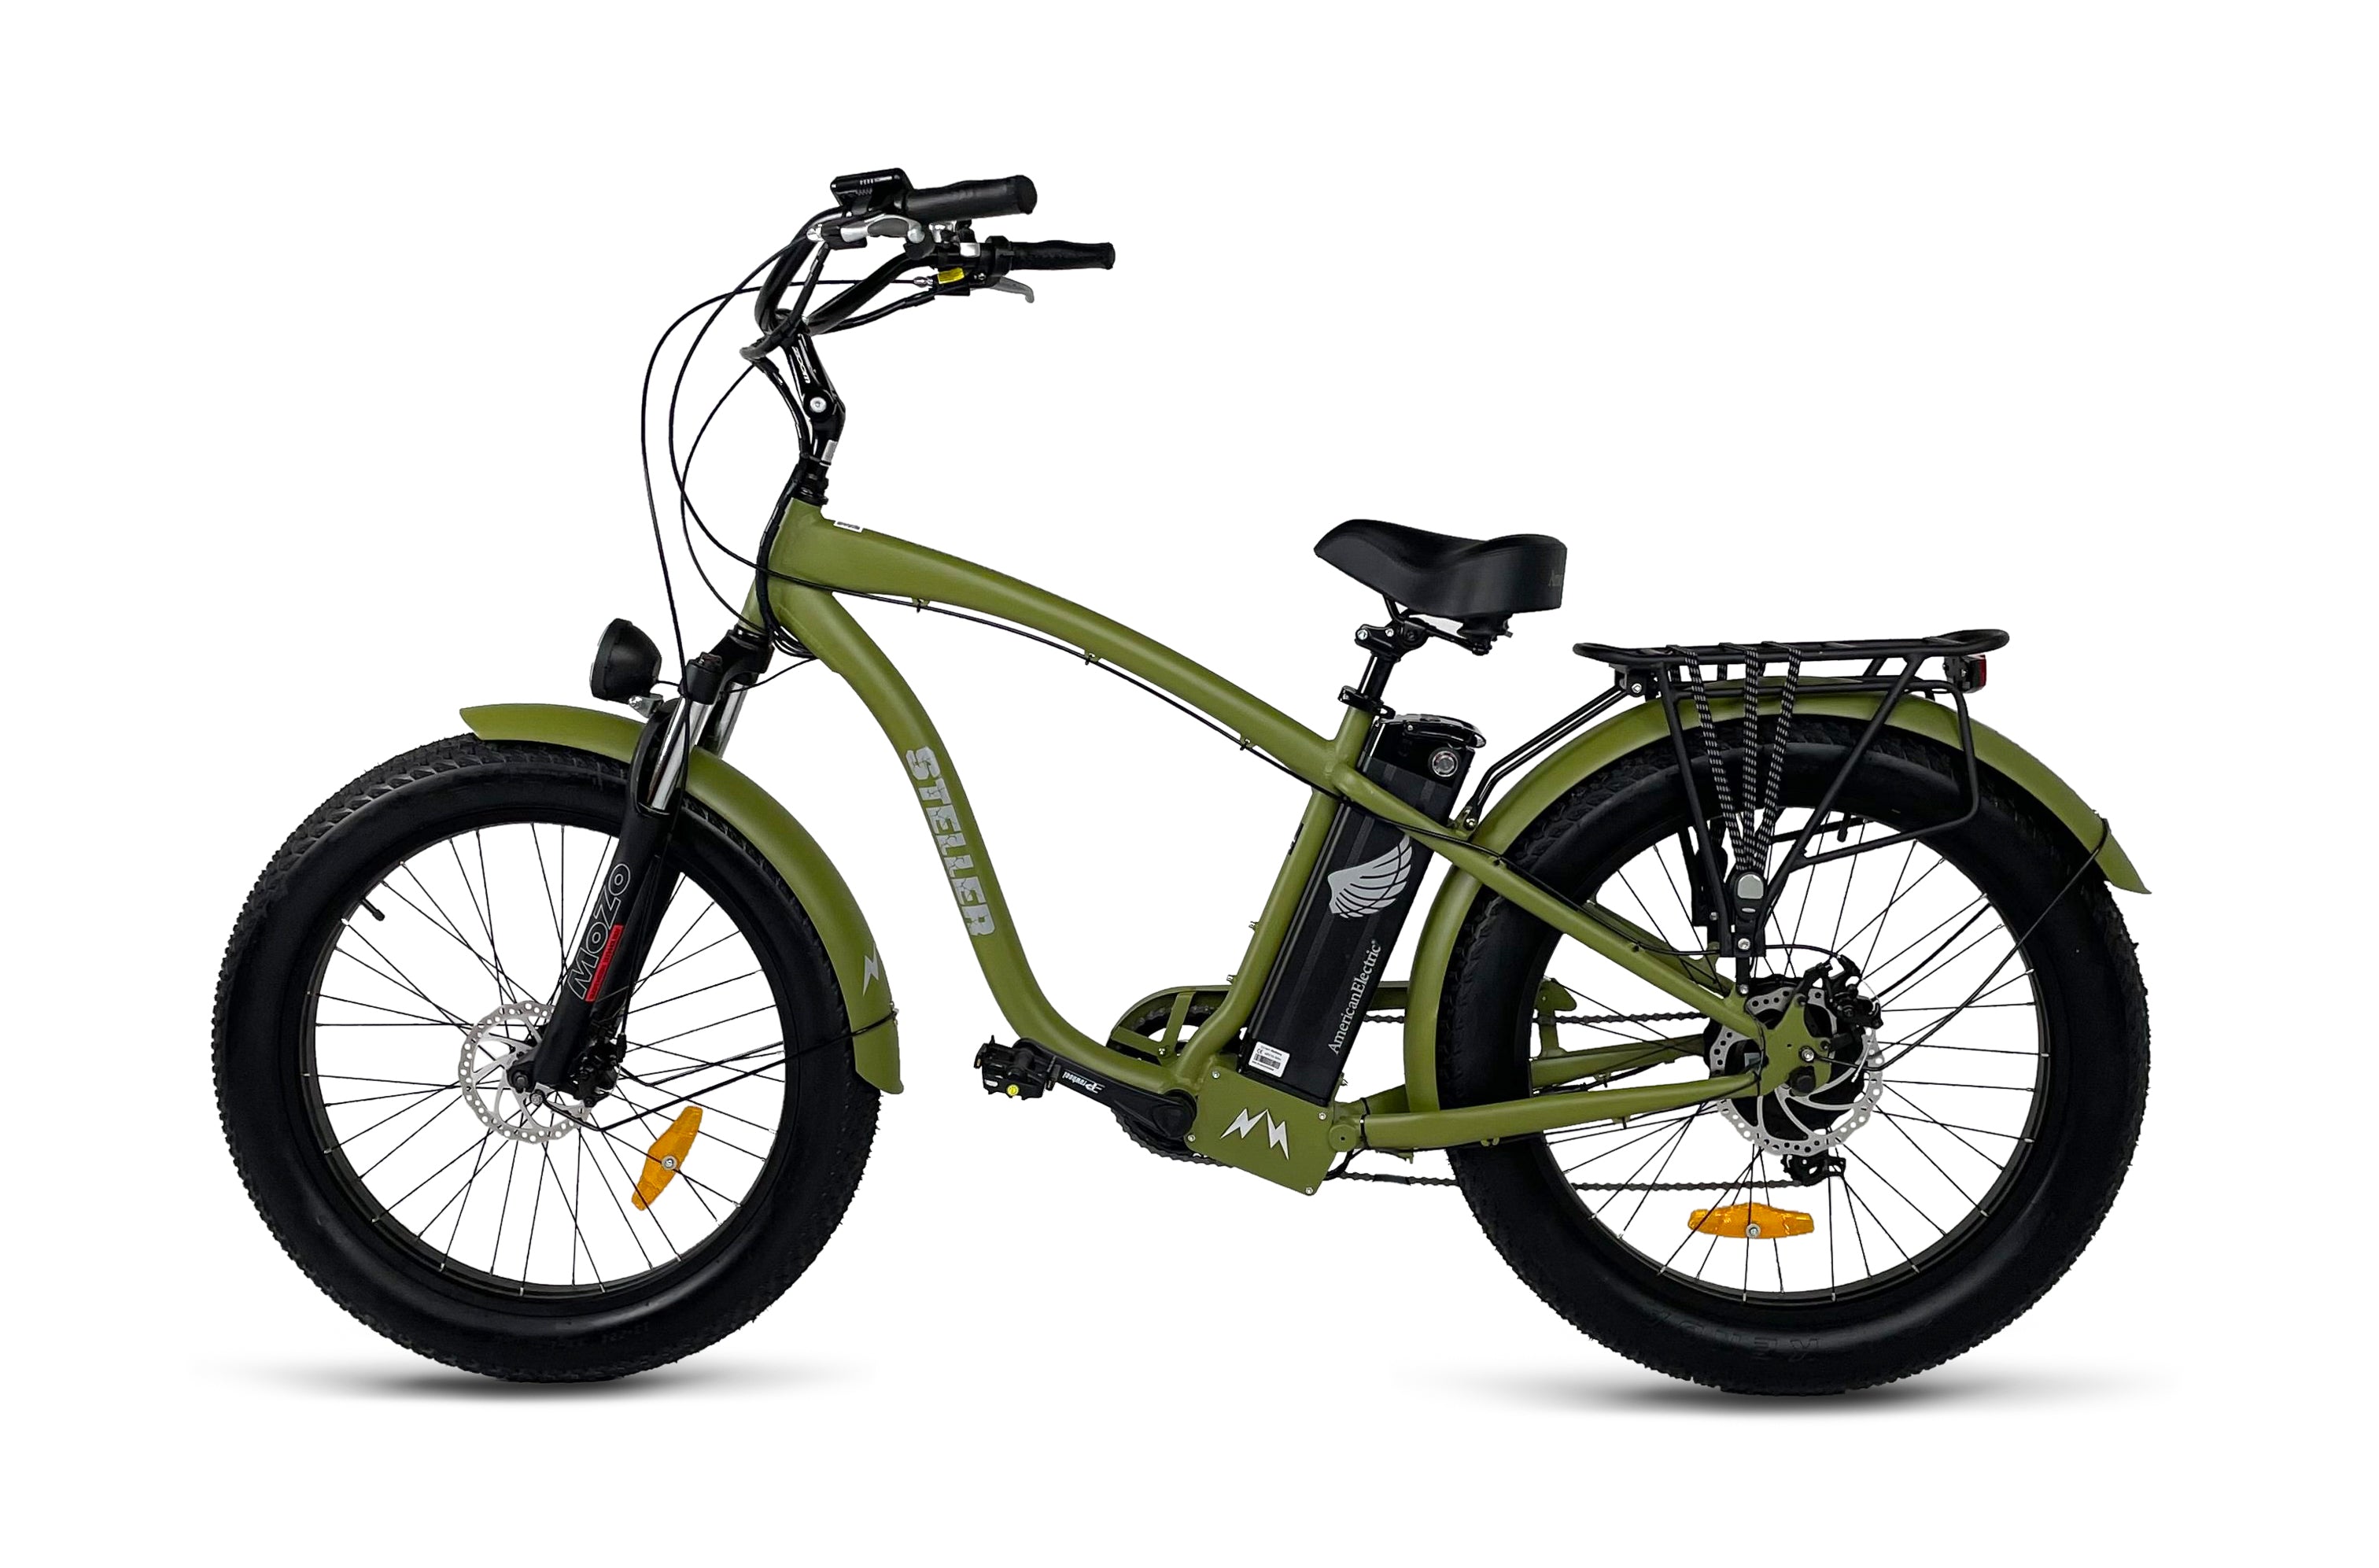 AmericanElectric Steller 2022 750w 15.6Ah Crossbar Electric Cruiser Bicycle